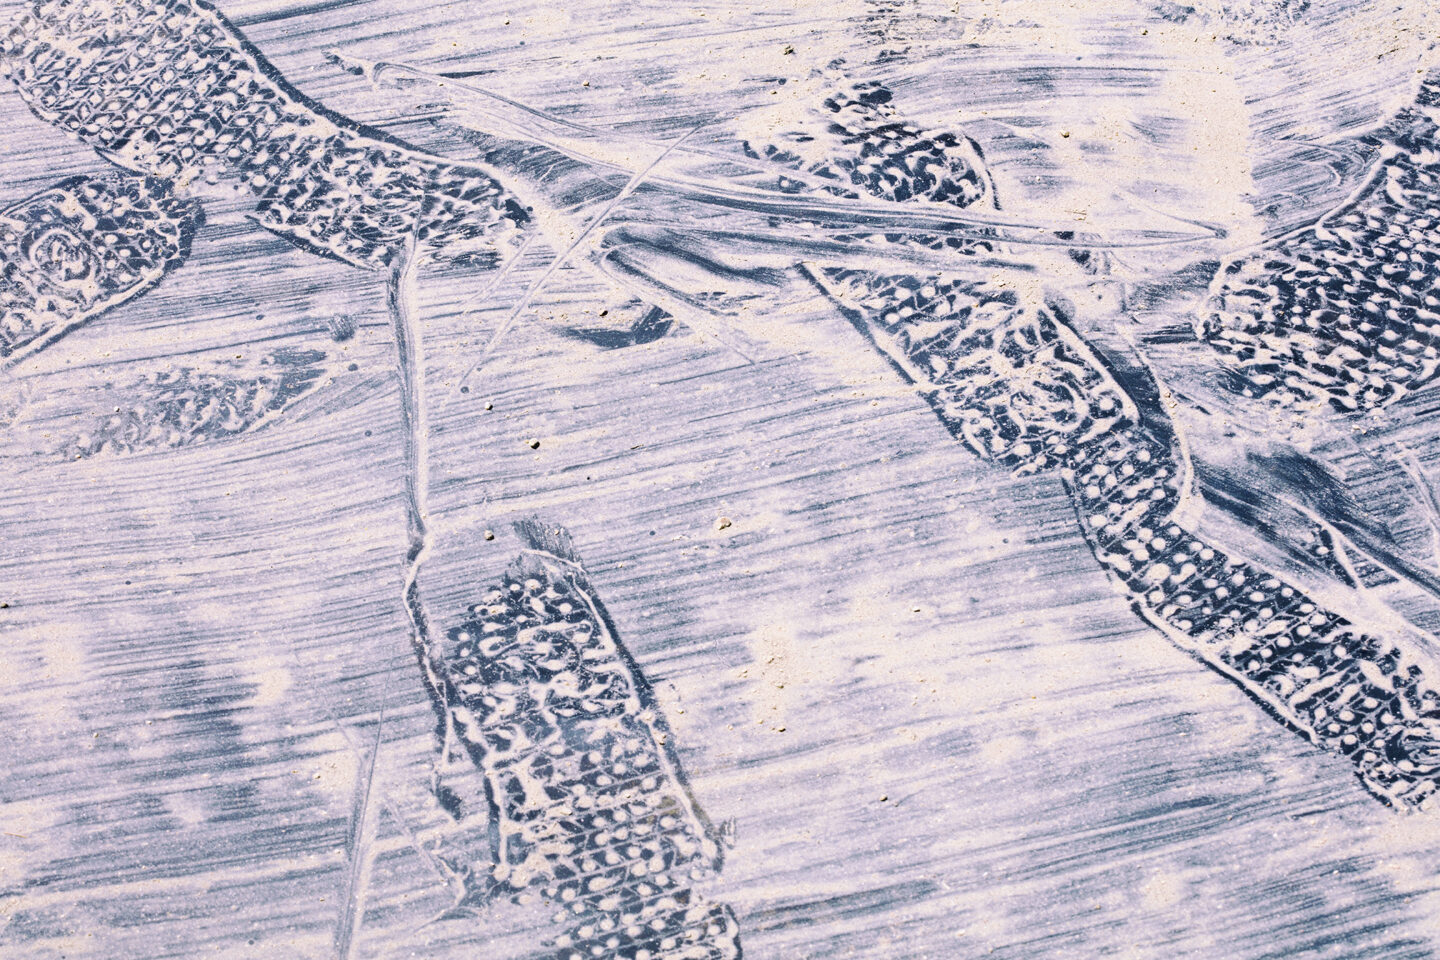 Abstract image of footprints by Carol Schiraldi 
